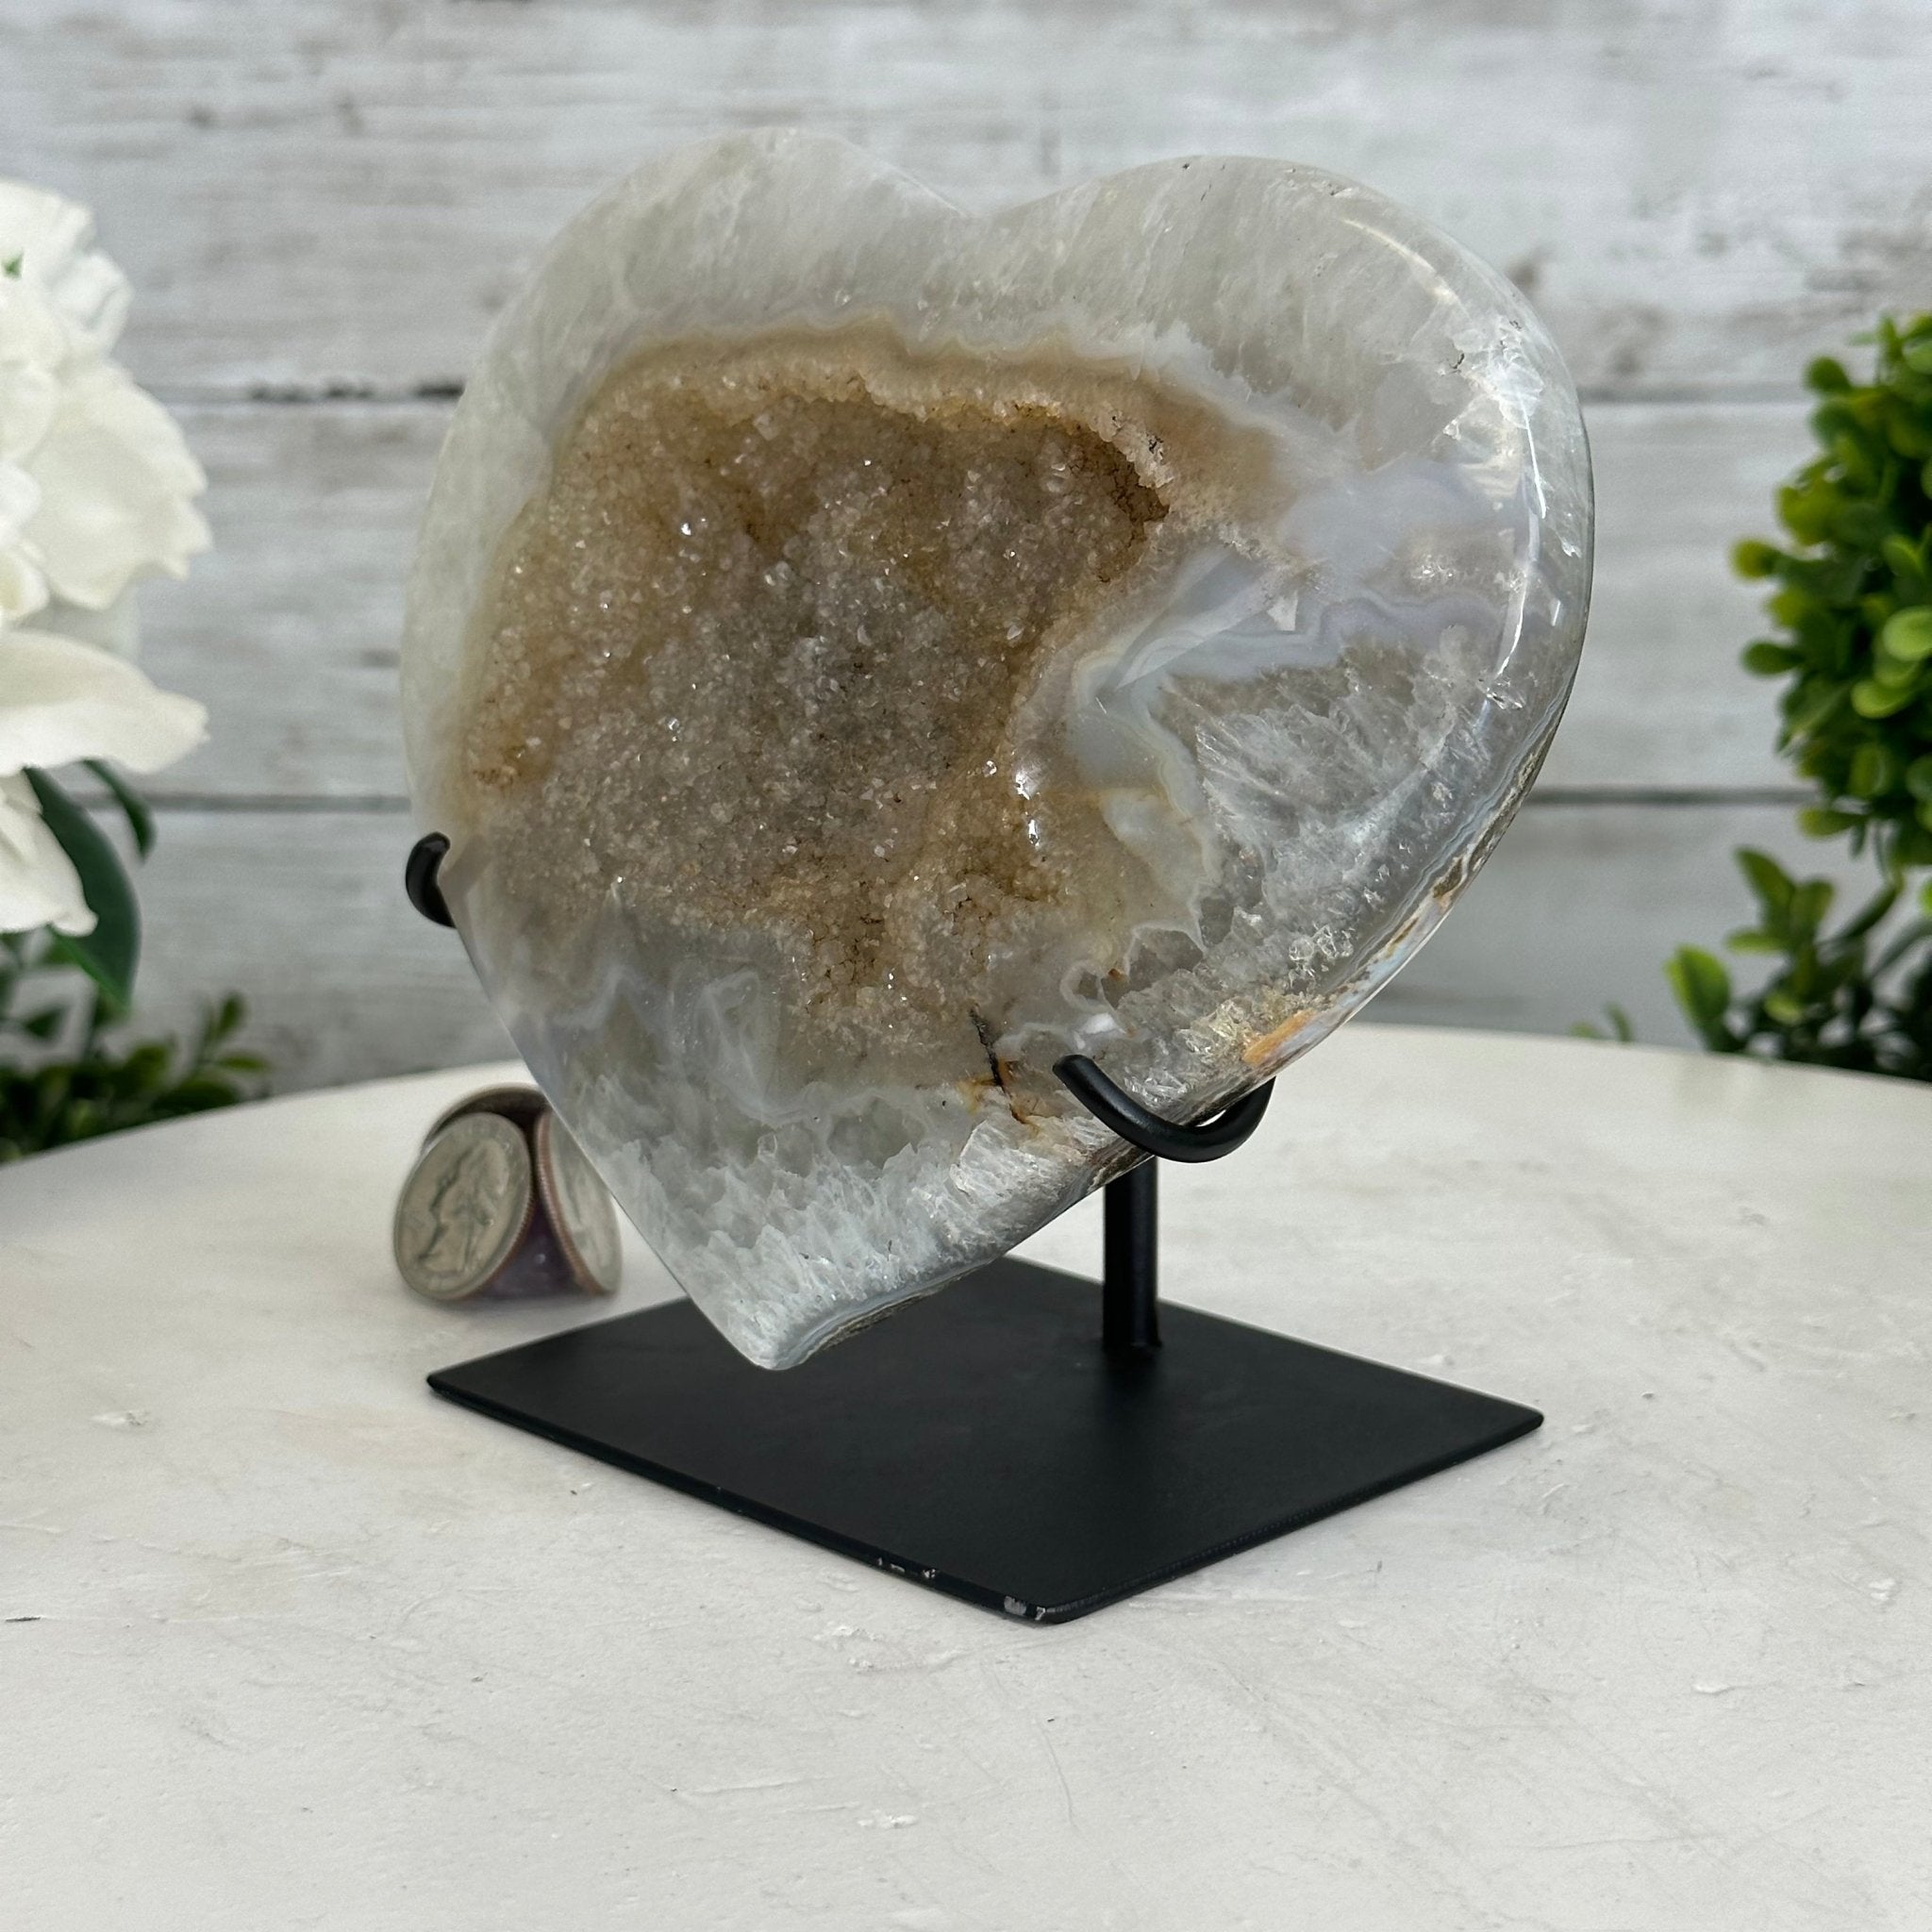 Polished Agate Heart Geode on a Metal Stand, 3.1 lbs & 5.7" Tall, Model #5468-0051 by Brazil Gems - Brazil GemsBrazil GemsPolished Agate Heart Geode on a Metal Stand, 3.1 lbs & 5.7" Tall, Model #5468-0051 by Brazil GemsHearts5468-0051